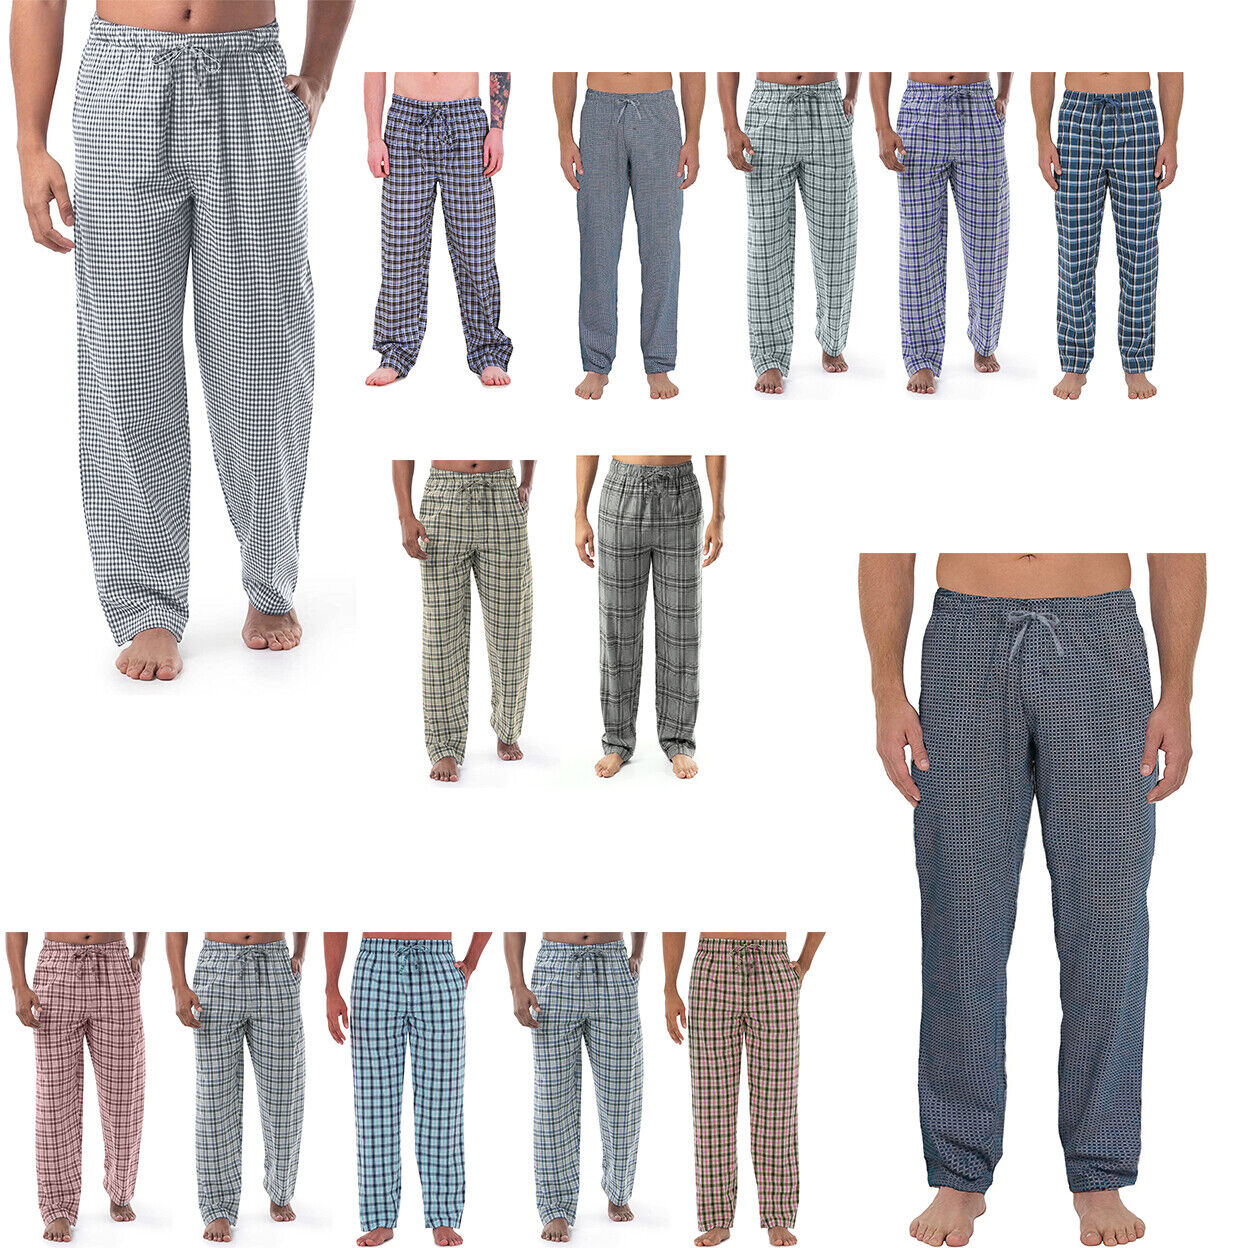 2-Pack: Men's Ultra-Soft Solid & Plaid Cotton Jersey Knit Comfy Sleep Lounge Pajama Pants - Plaid, Xx-large